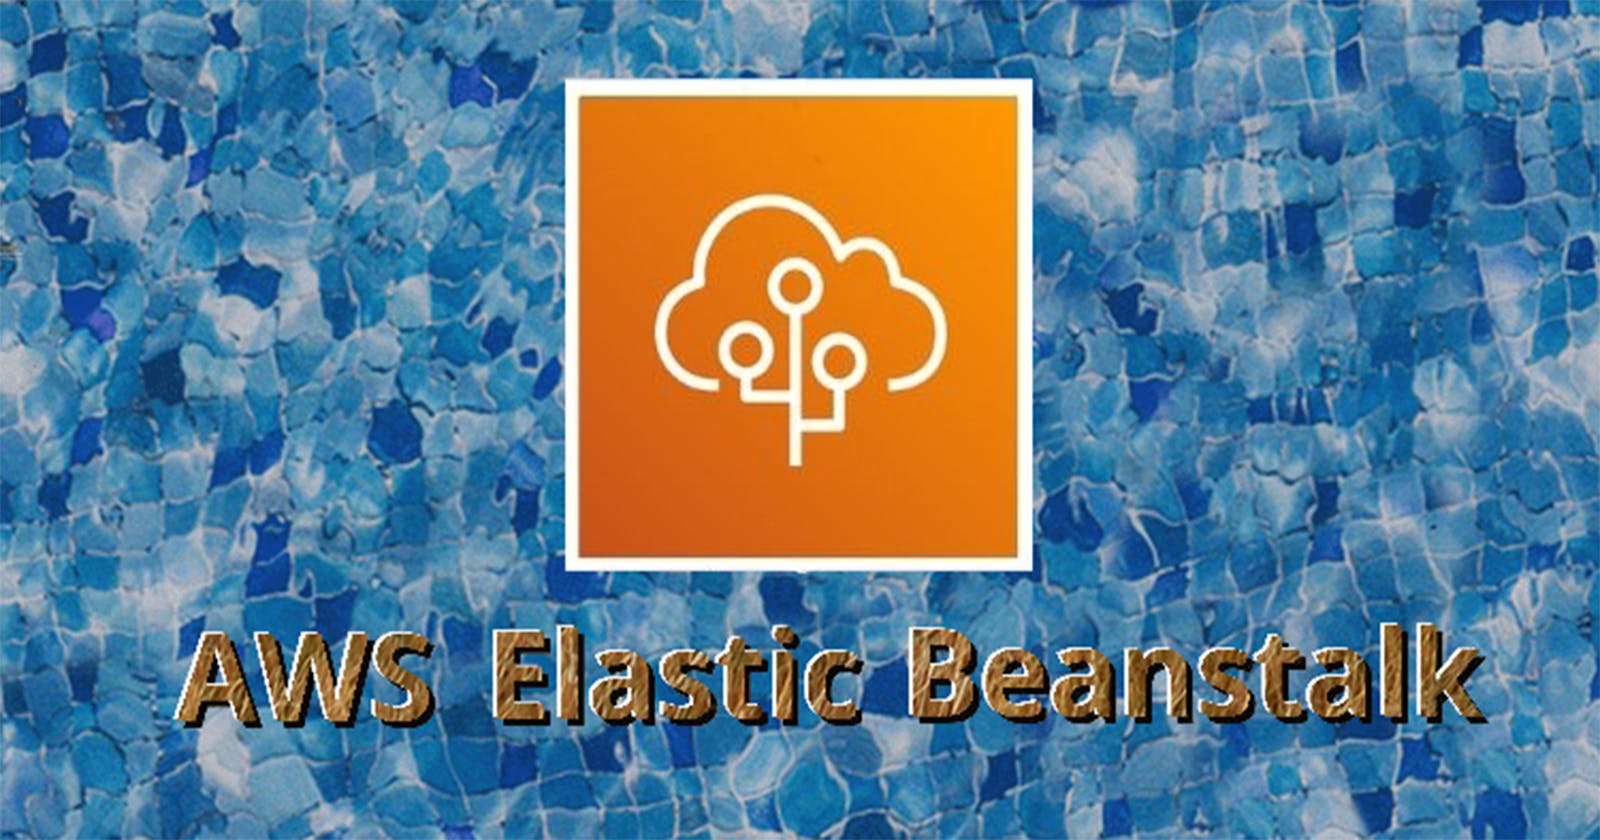 AWS Elastic Beanstalk: Simplifying the cloud